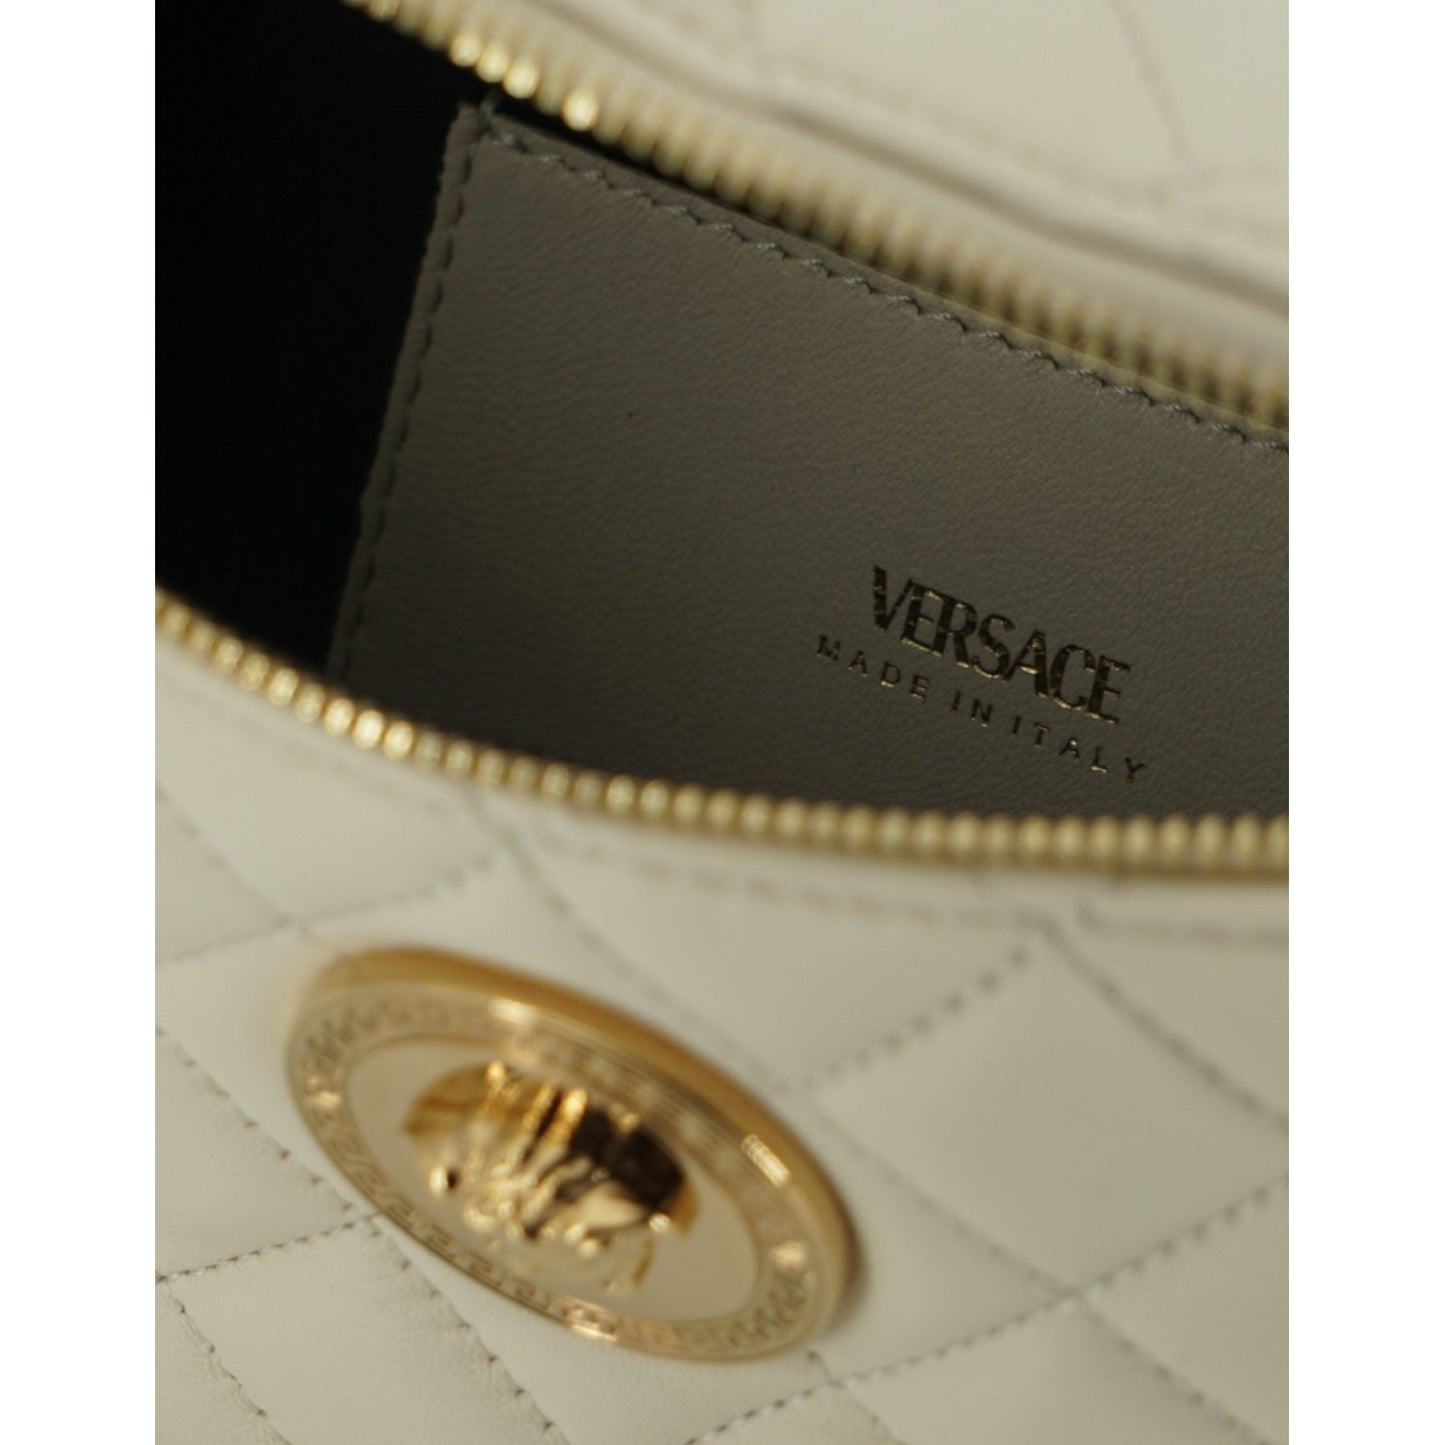 Versace White Lamb Leather Belt Bag white-lamb-leather-belt-bag DSC01194-scaled-e9a5e85d-695.jpg